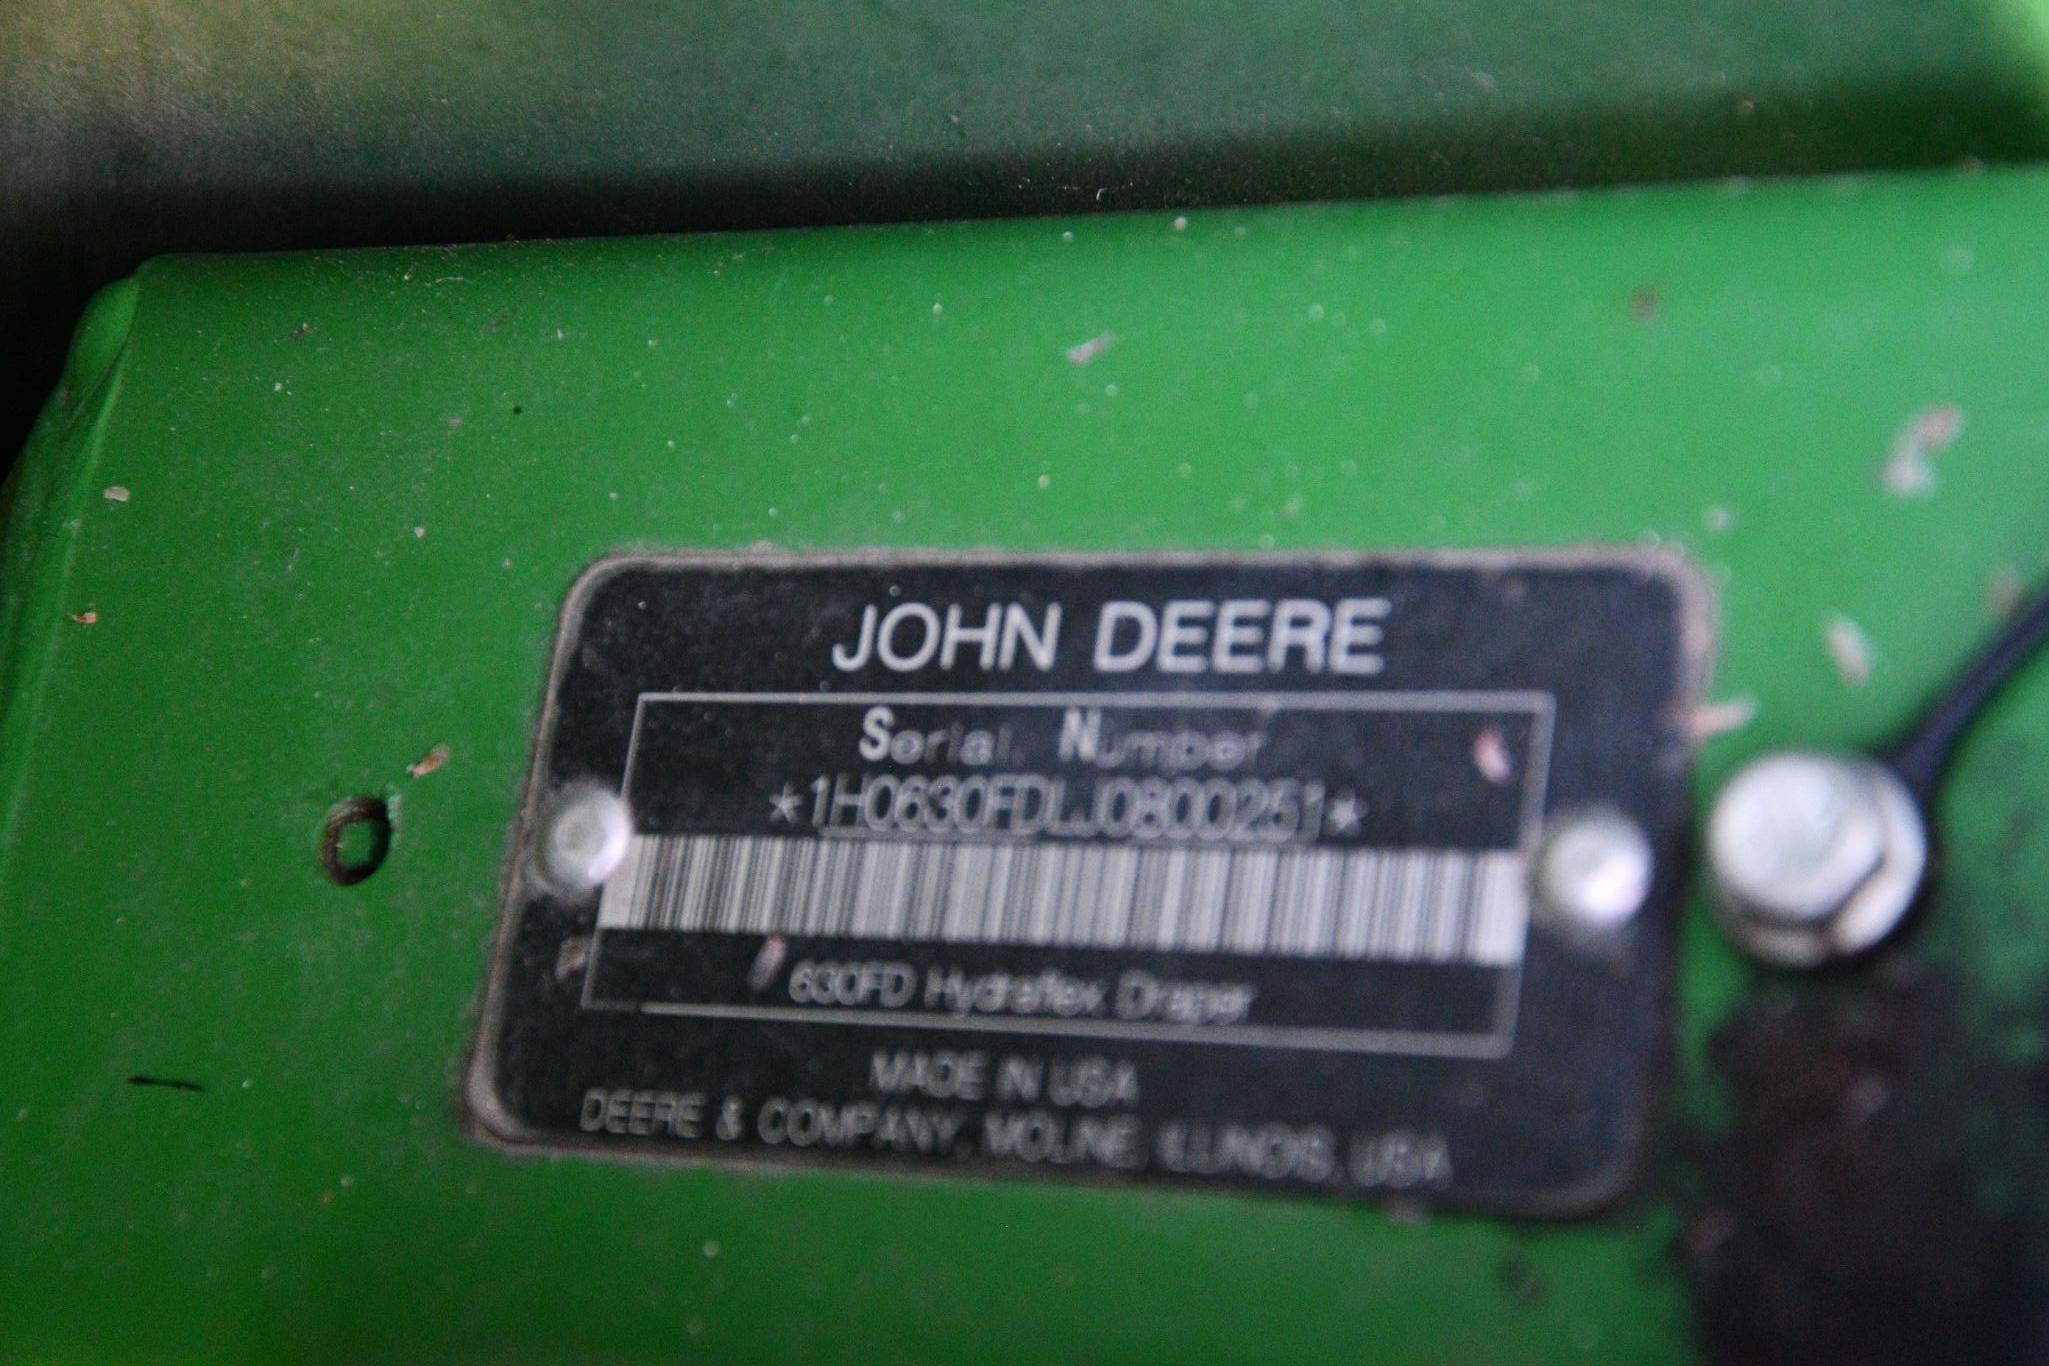 2018 John Deere 630FD 30' HydraFlex draper head